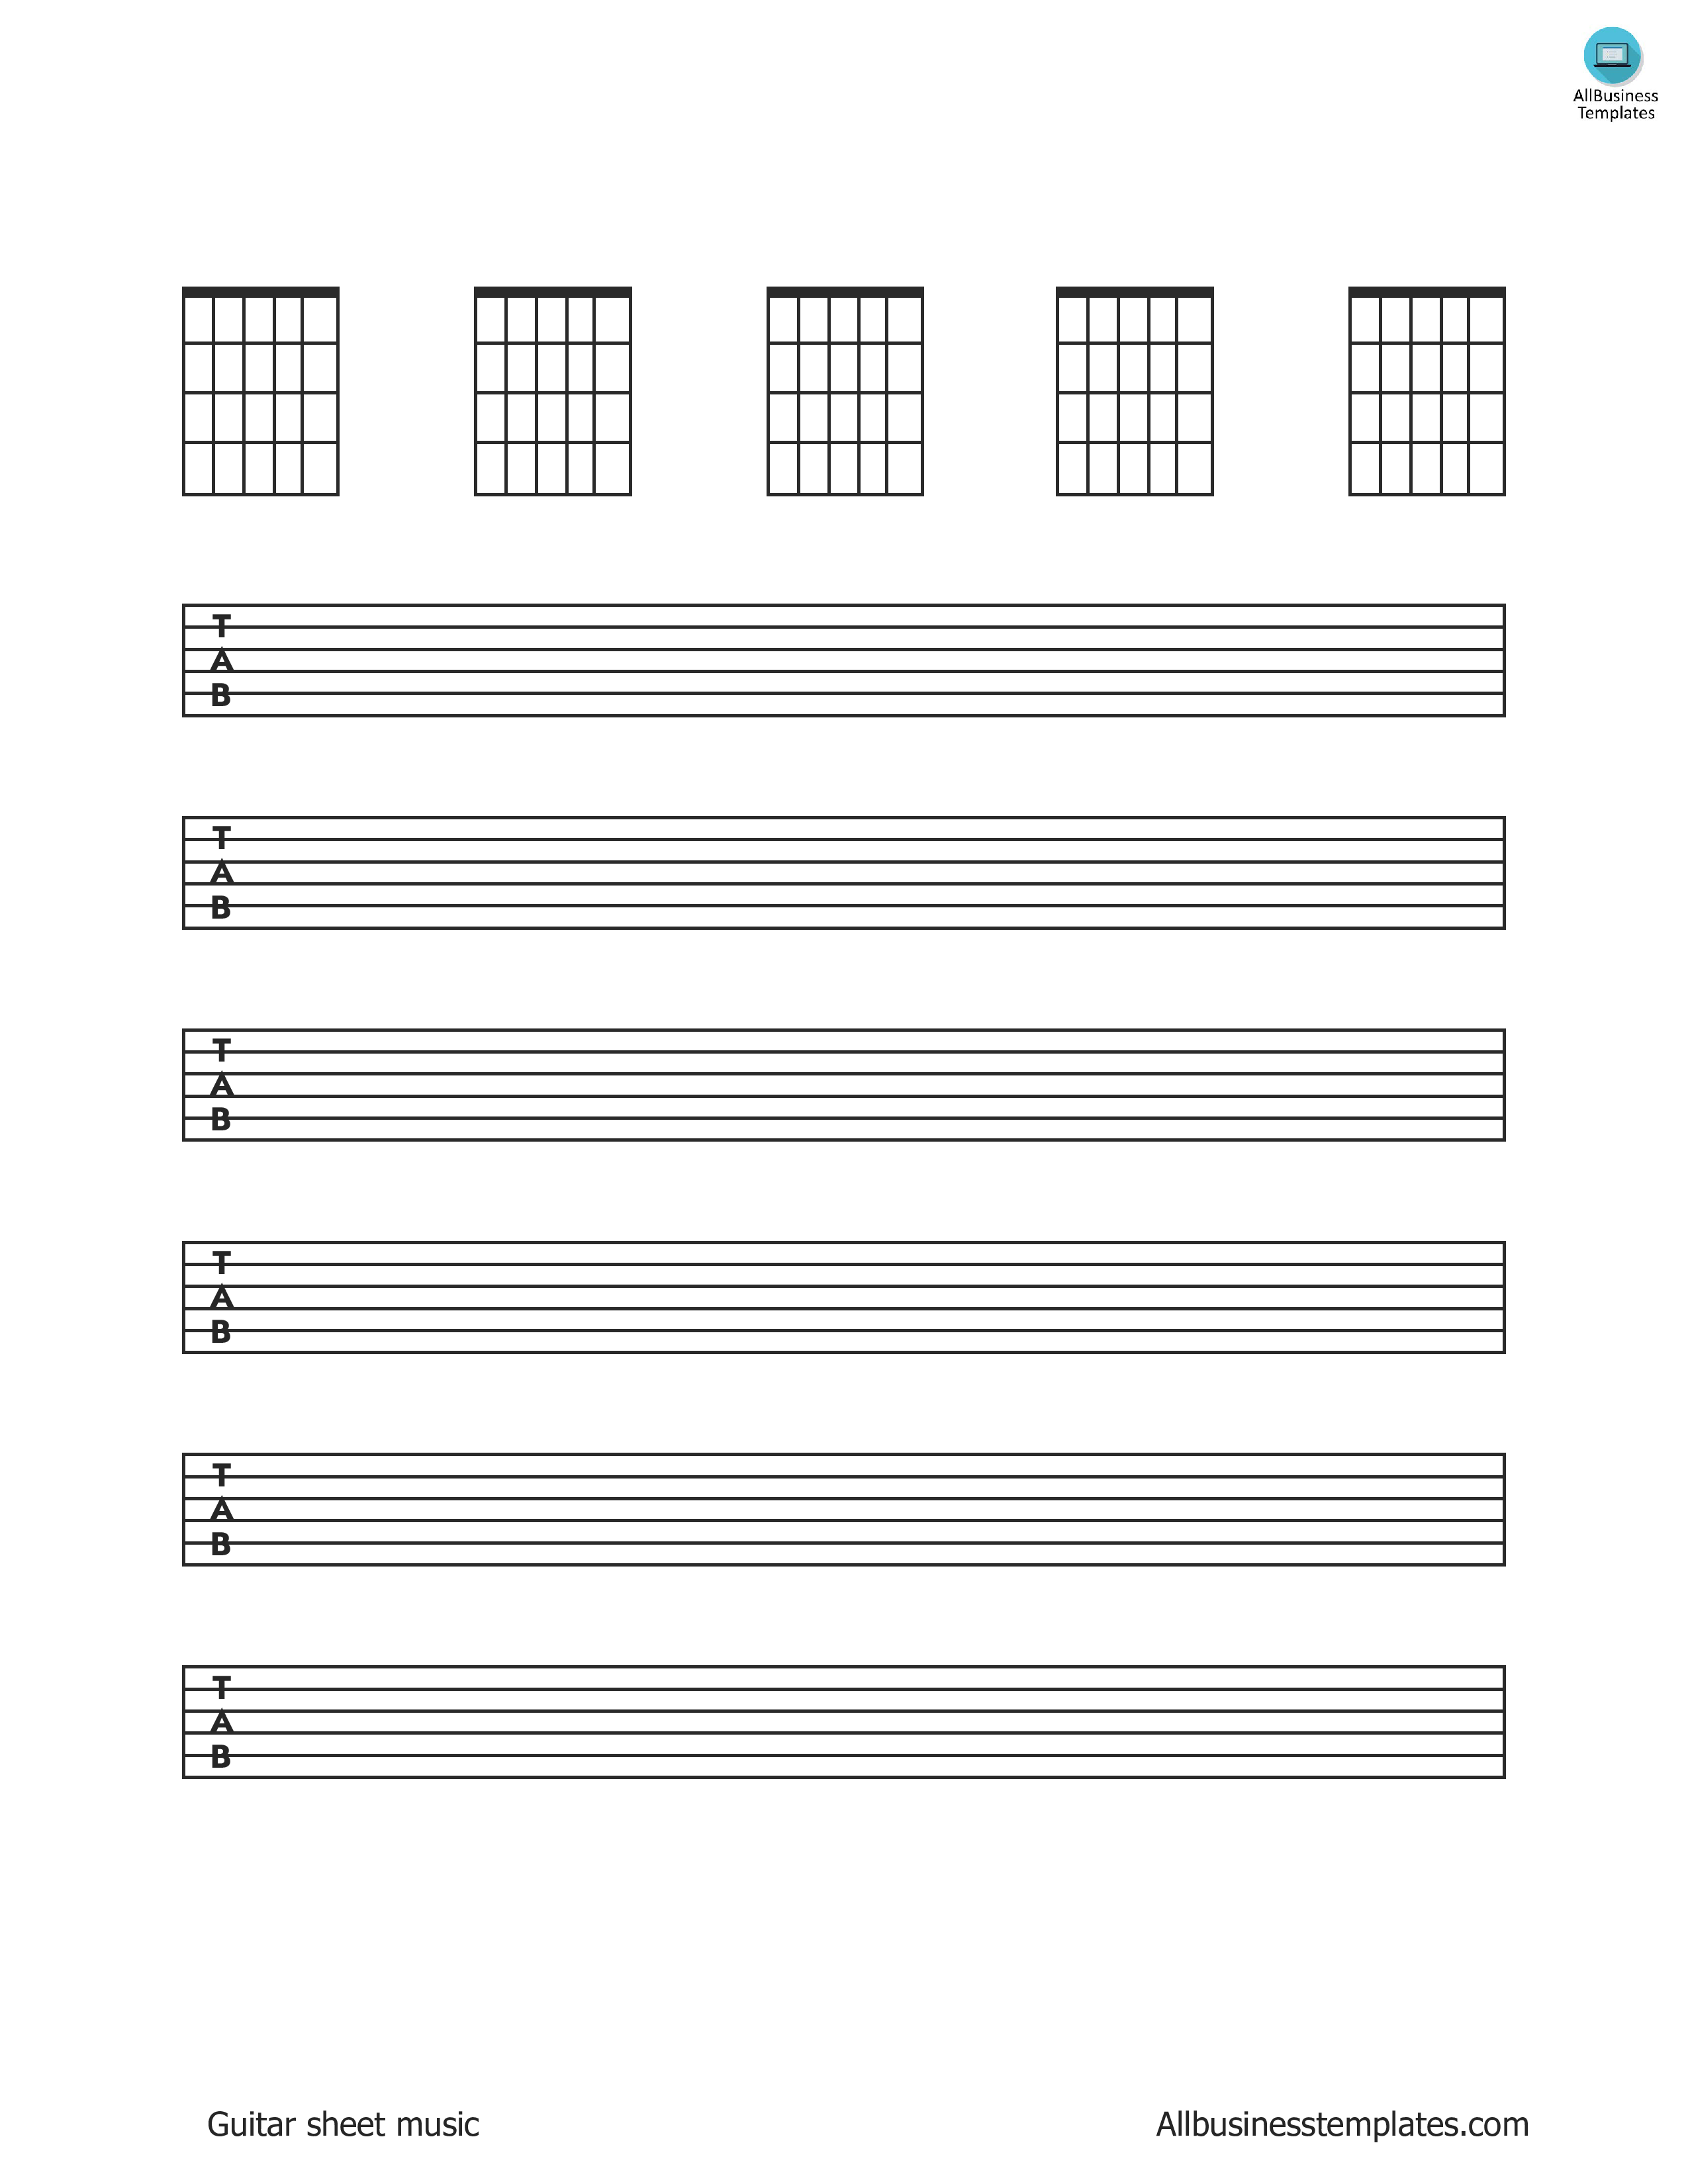 guitar sheet music sheets template